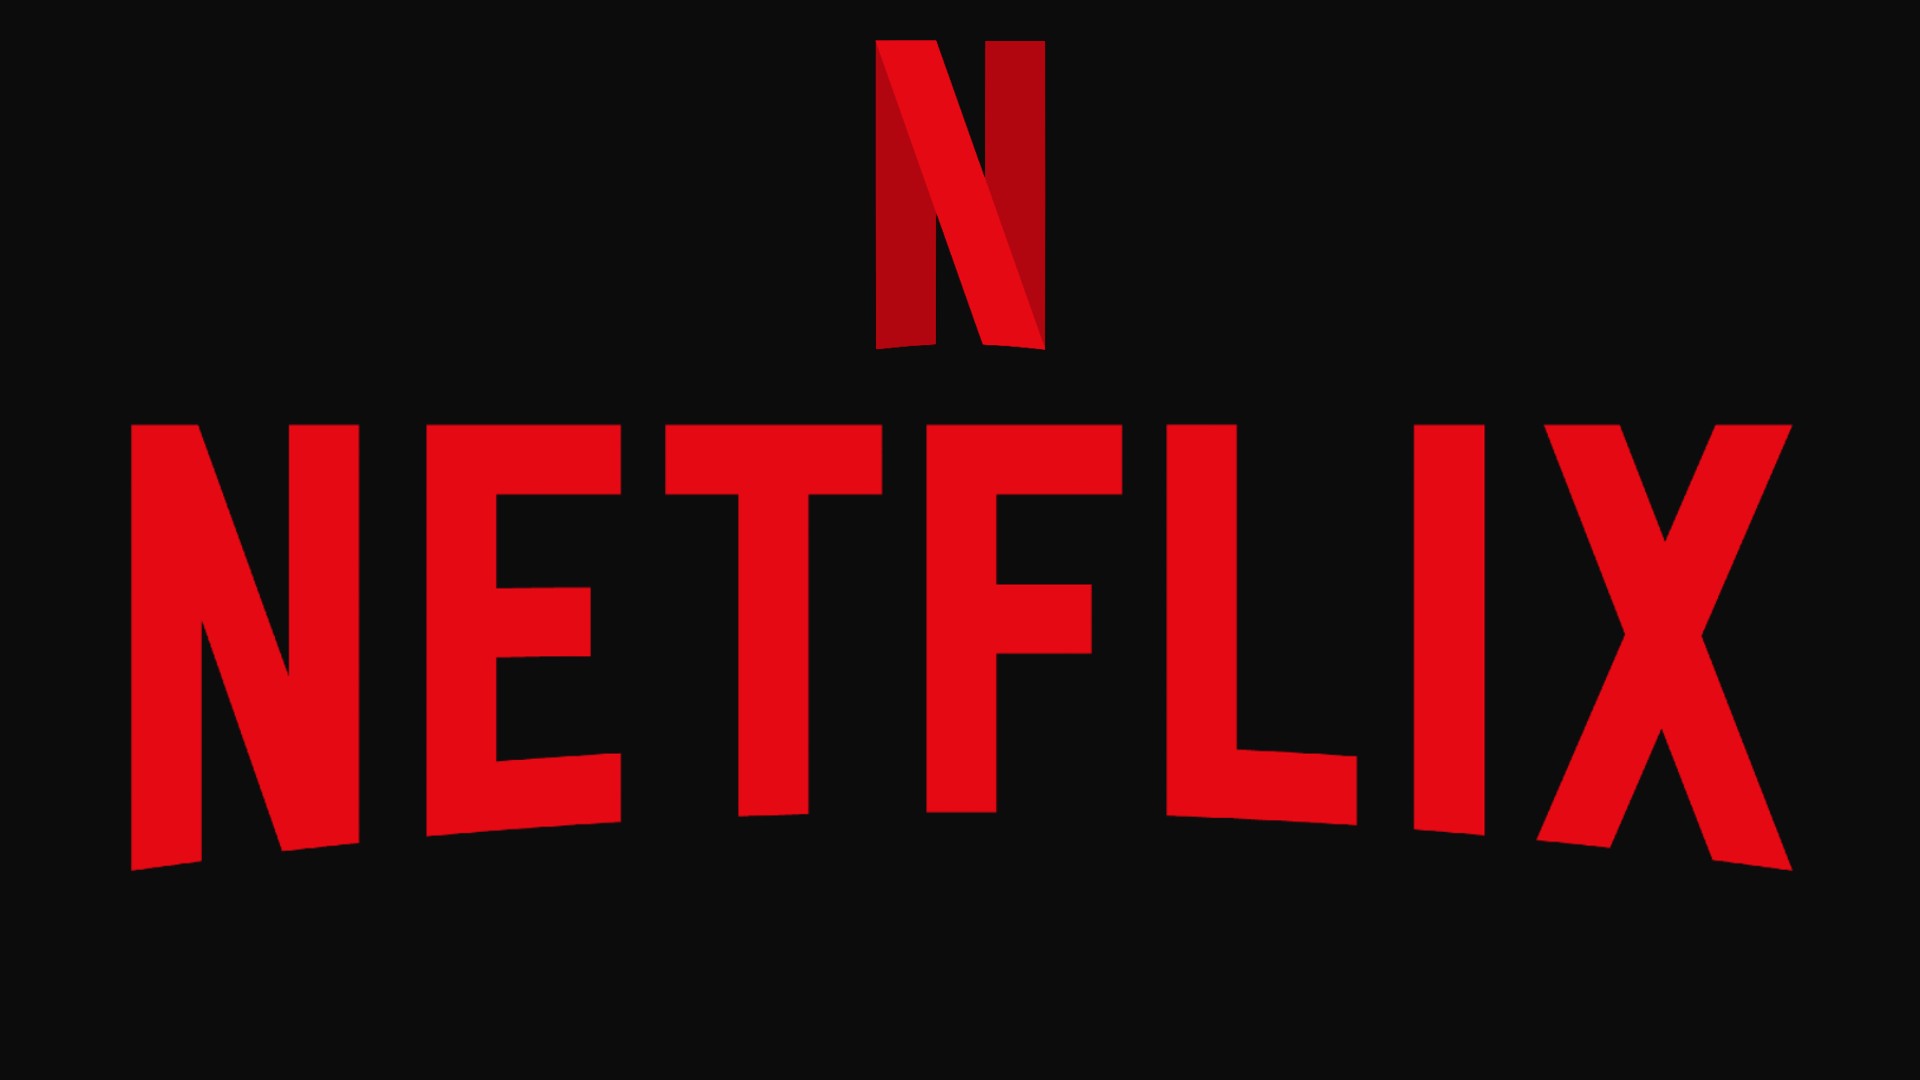 Netflix Developing Live-Action Horizon Zero Dawn, Our Scoop Confirmed